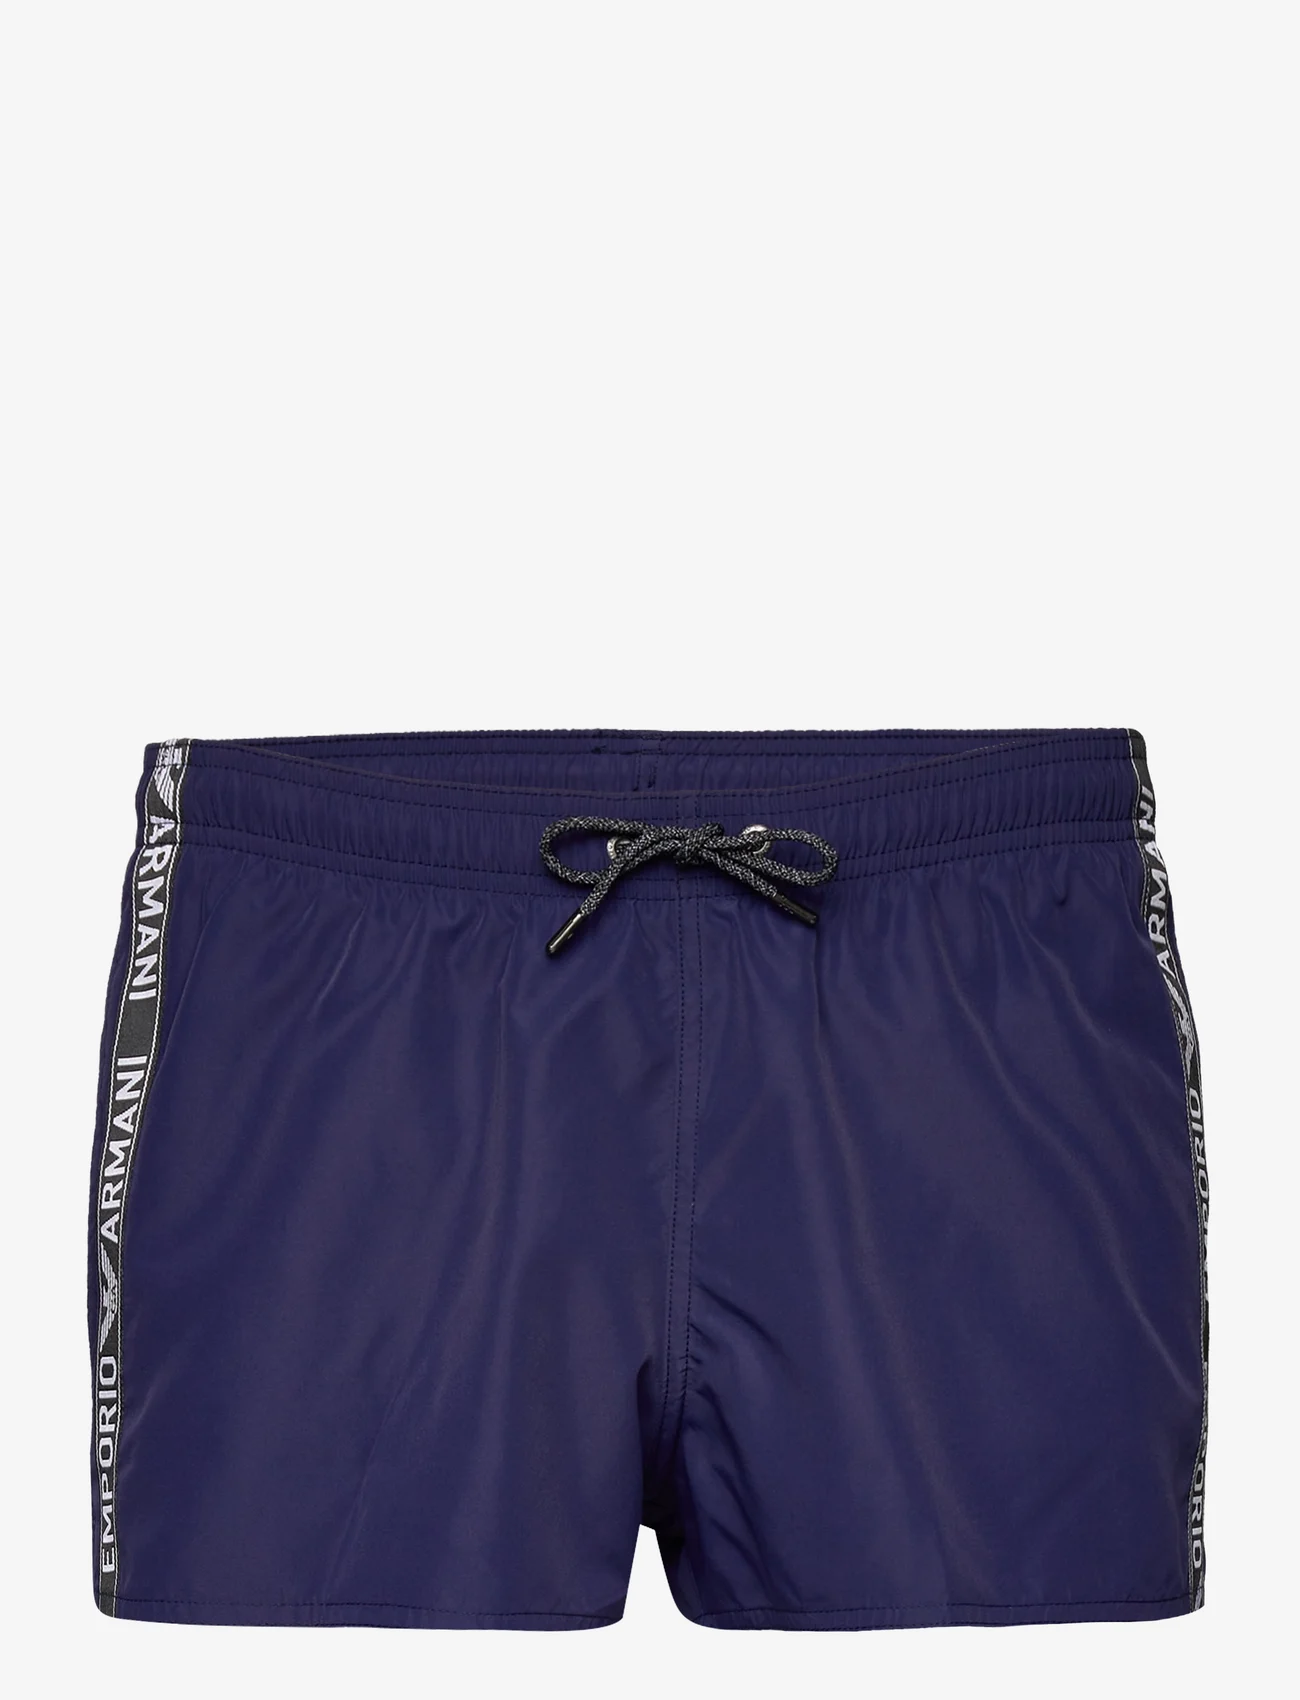 Emporio Armani - MENS WOVEN SHORTS - swim shorts - eclisse - 0